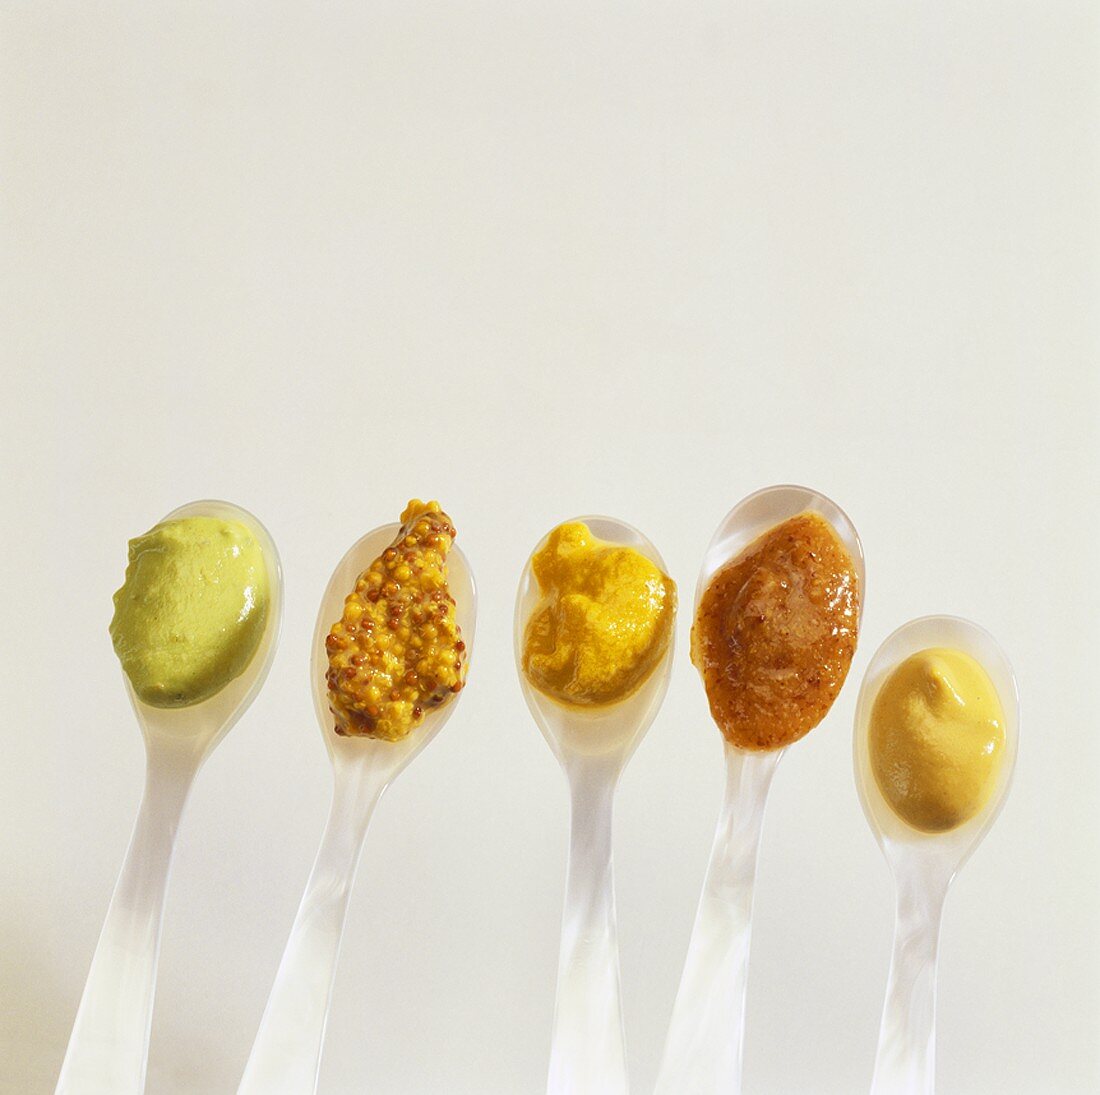 Mustard parade (Various types of mustard on spoons)